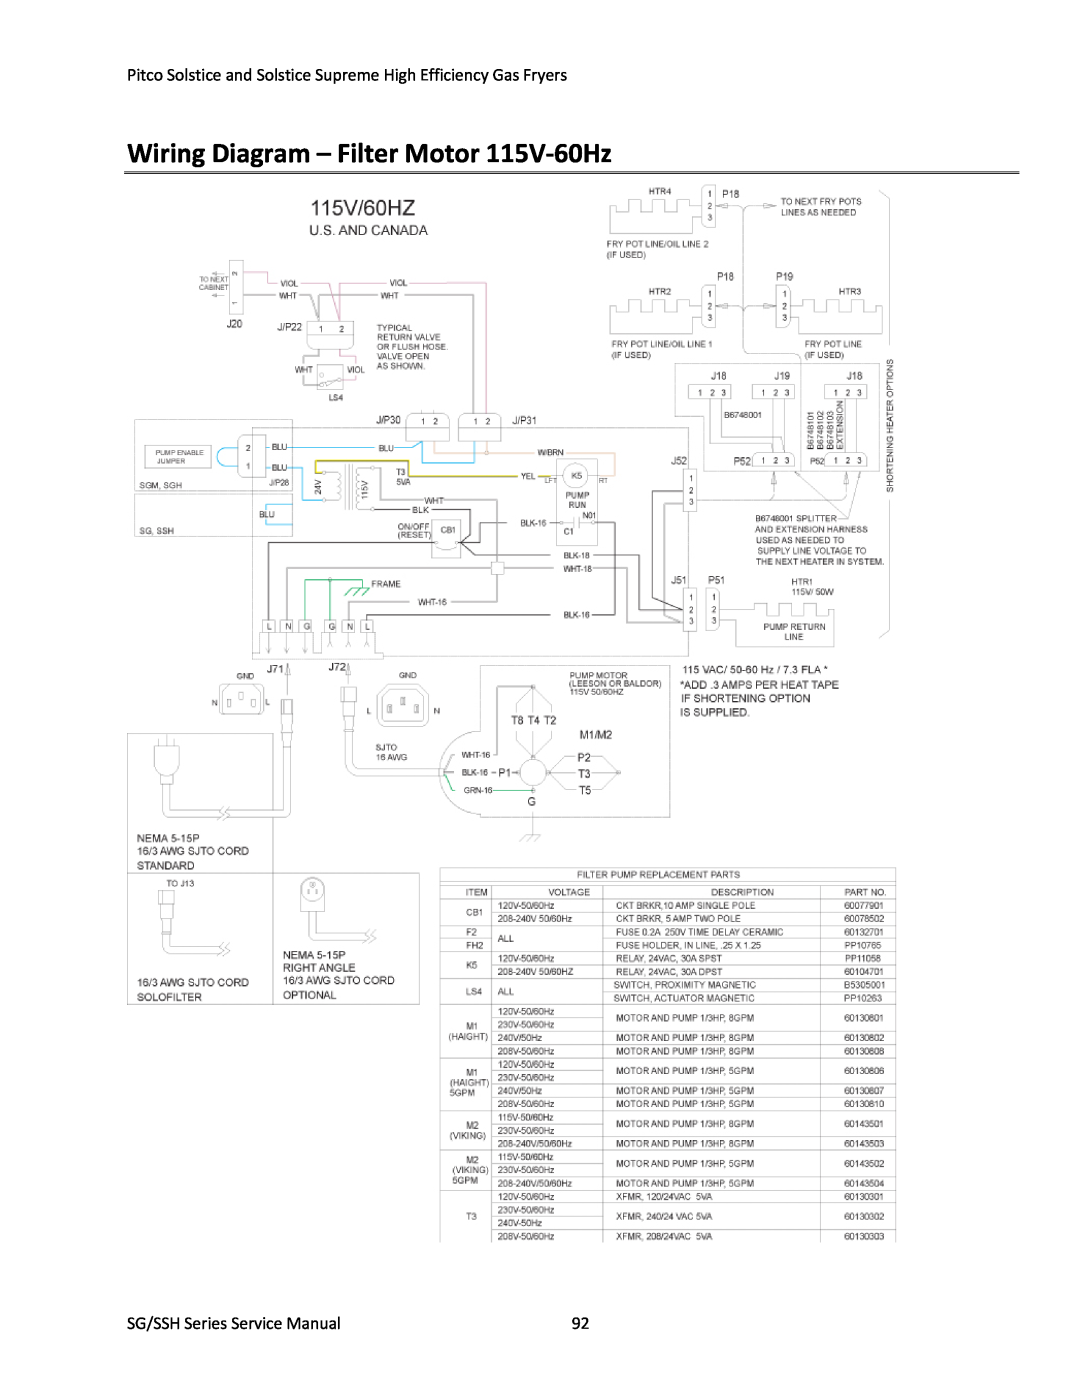 Pitco Frialator L22-345 manual Wiring Diagram – Filter Motor 115V‐60Hz, SG/SSH Series Service Manual 